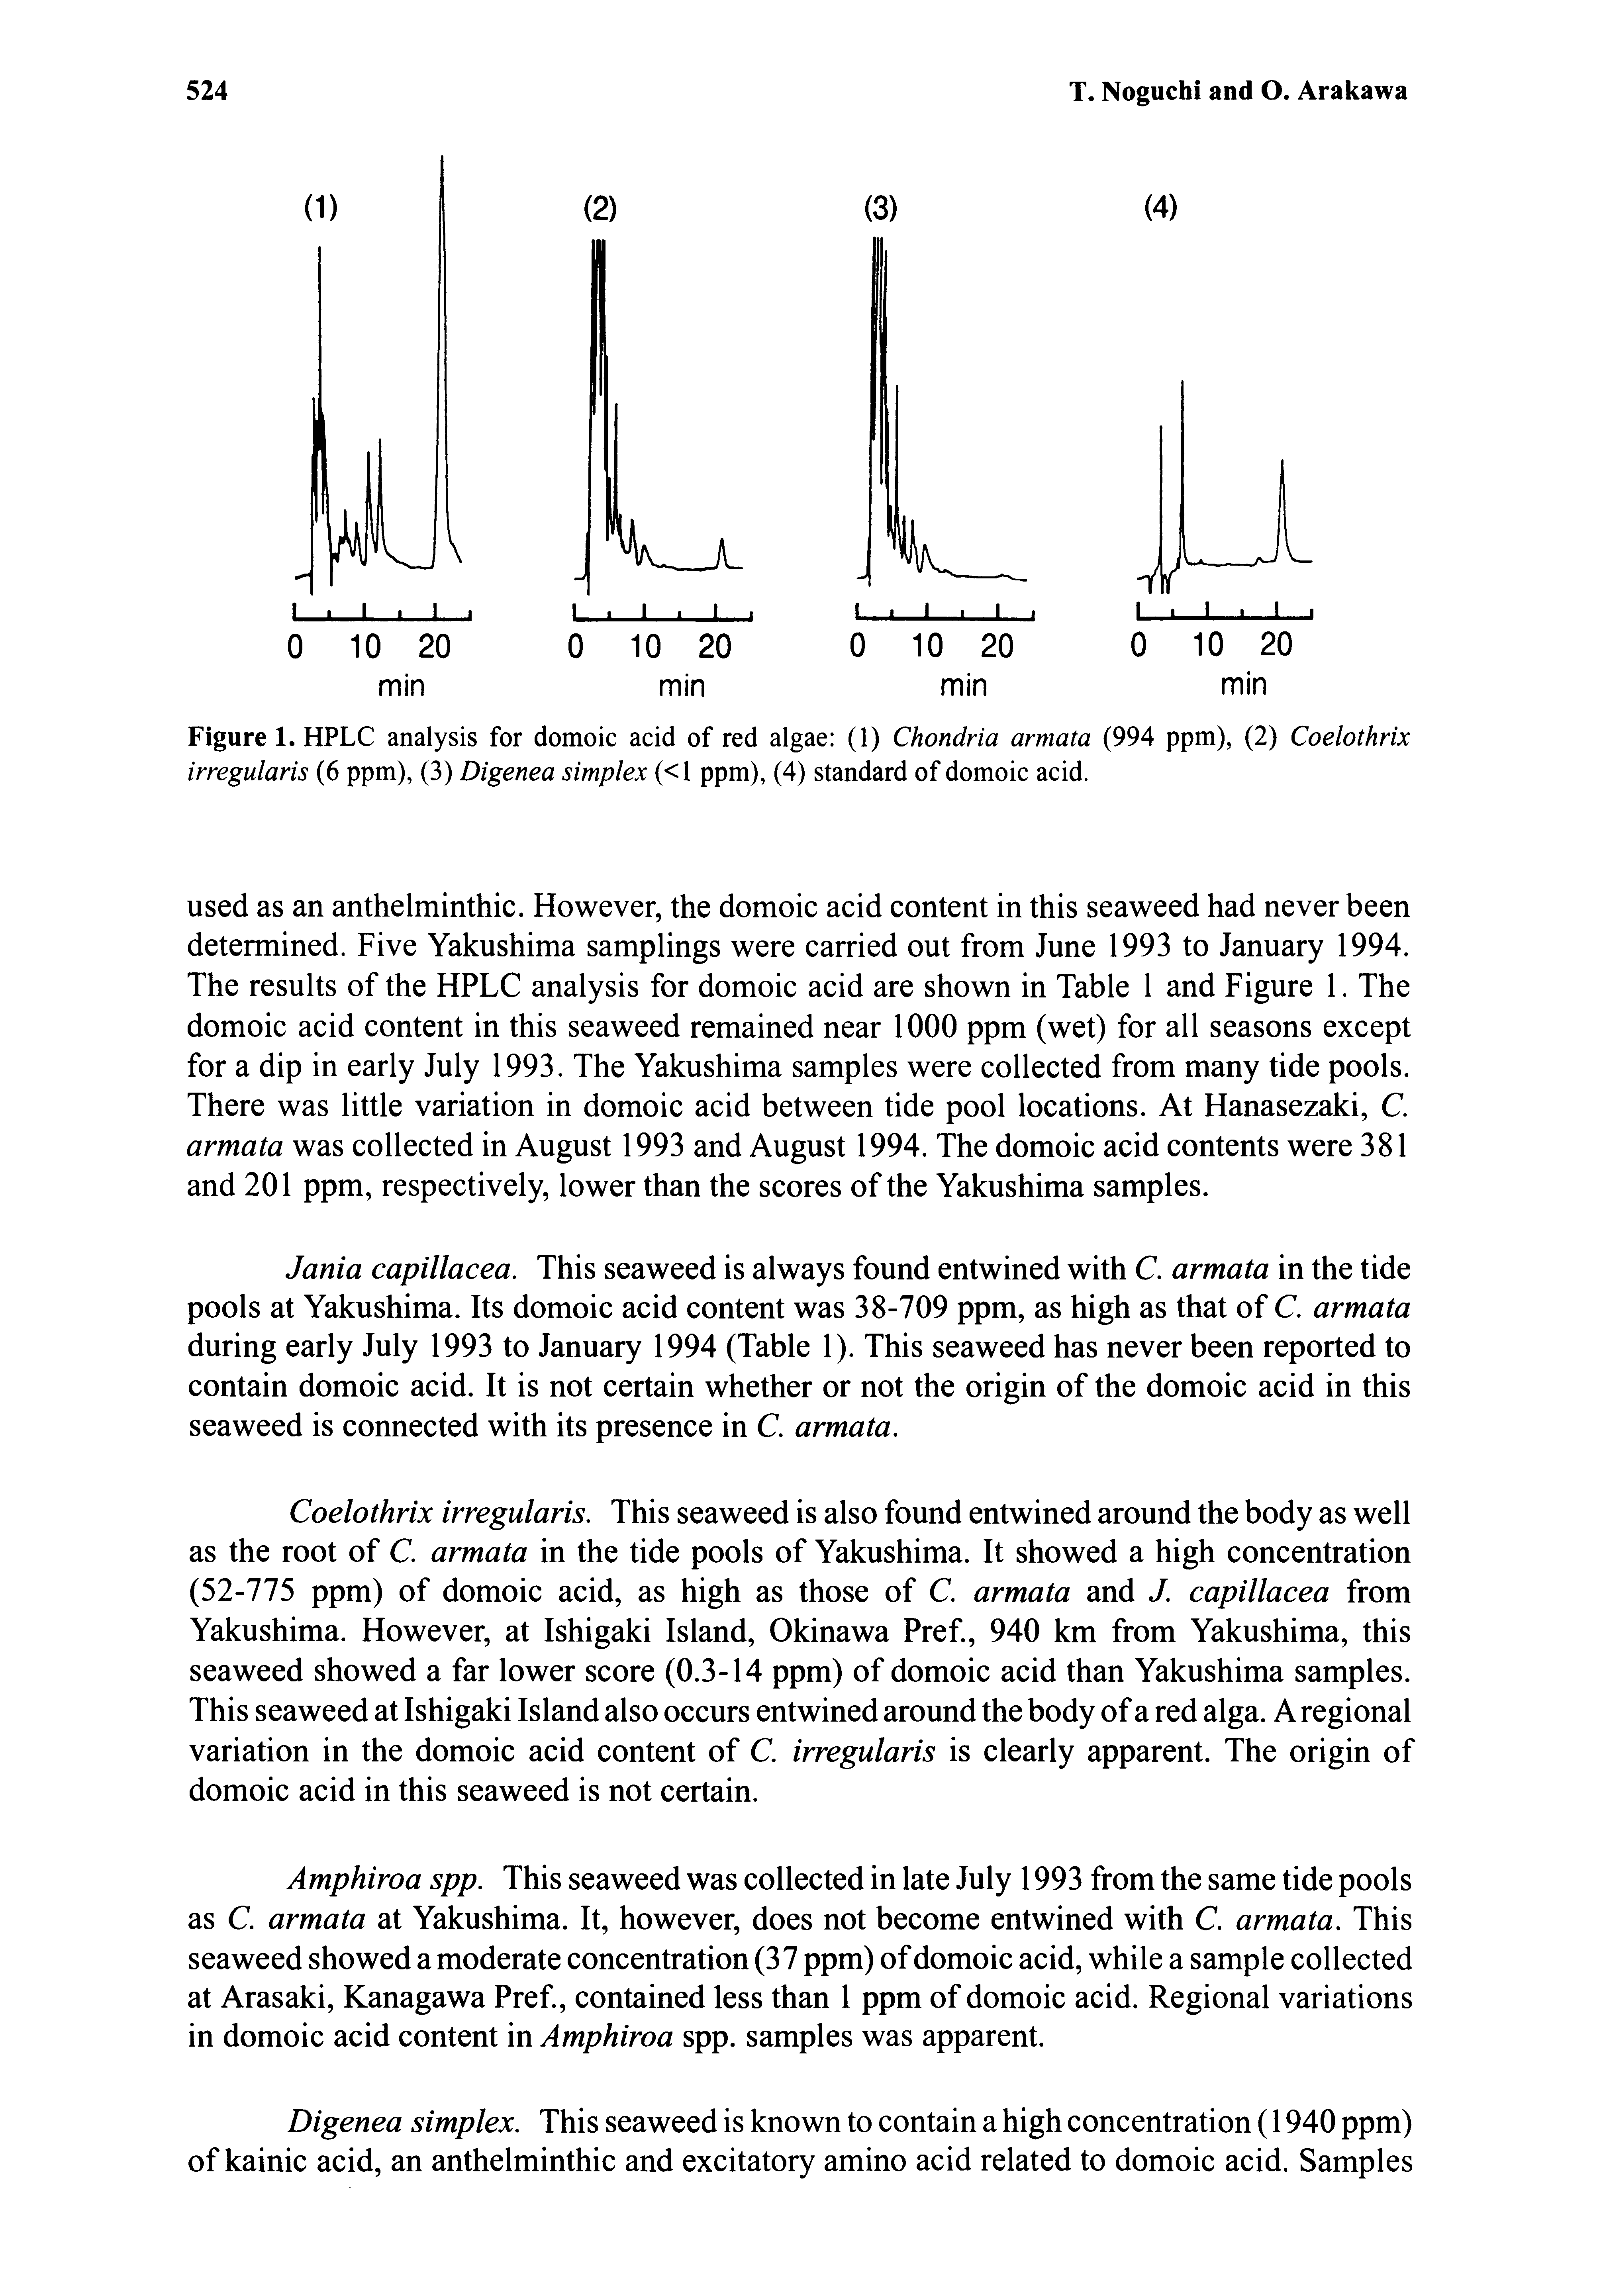 Figure 1. HPLC analysis for domoic acid of red algae (1) Chondria armata (994 ppm), (2) Coelothrix irregularis (6 ppm), (3) Digenea simplex (<1 ppm), (4) standard of domoic acid.